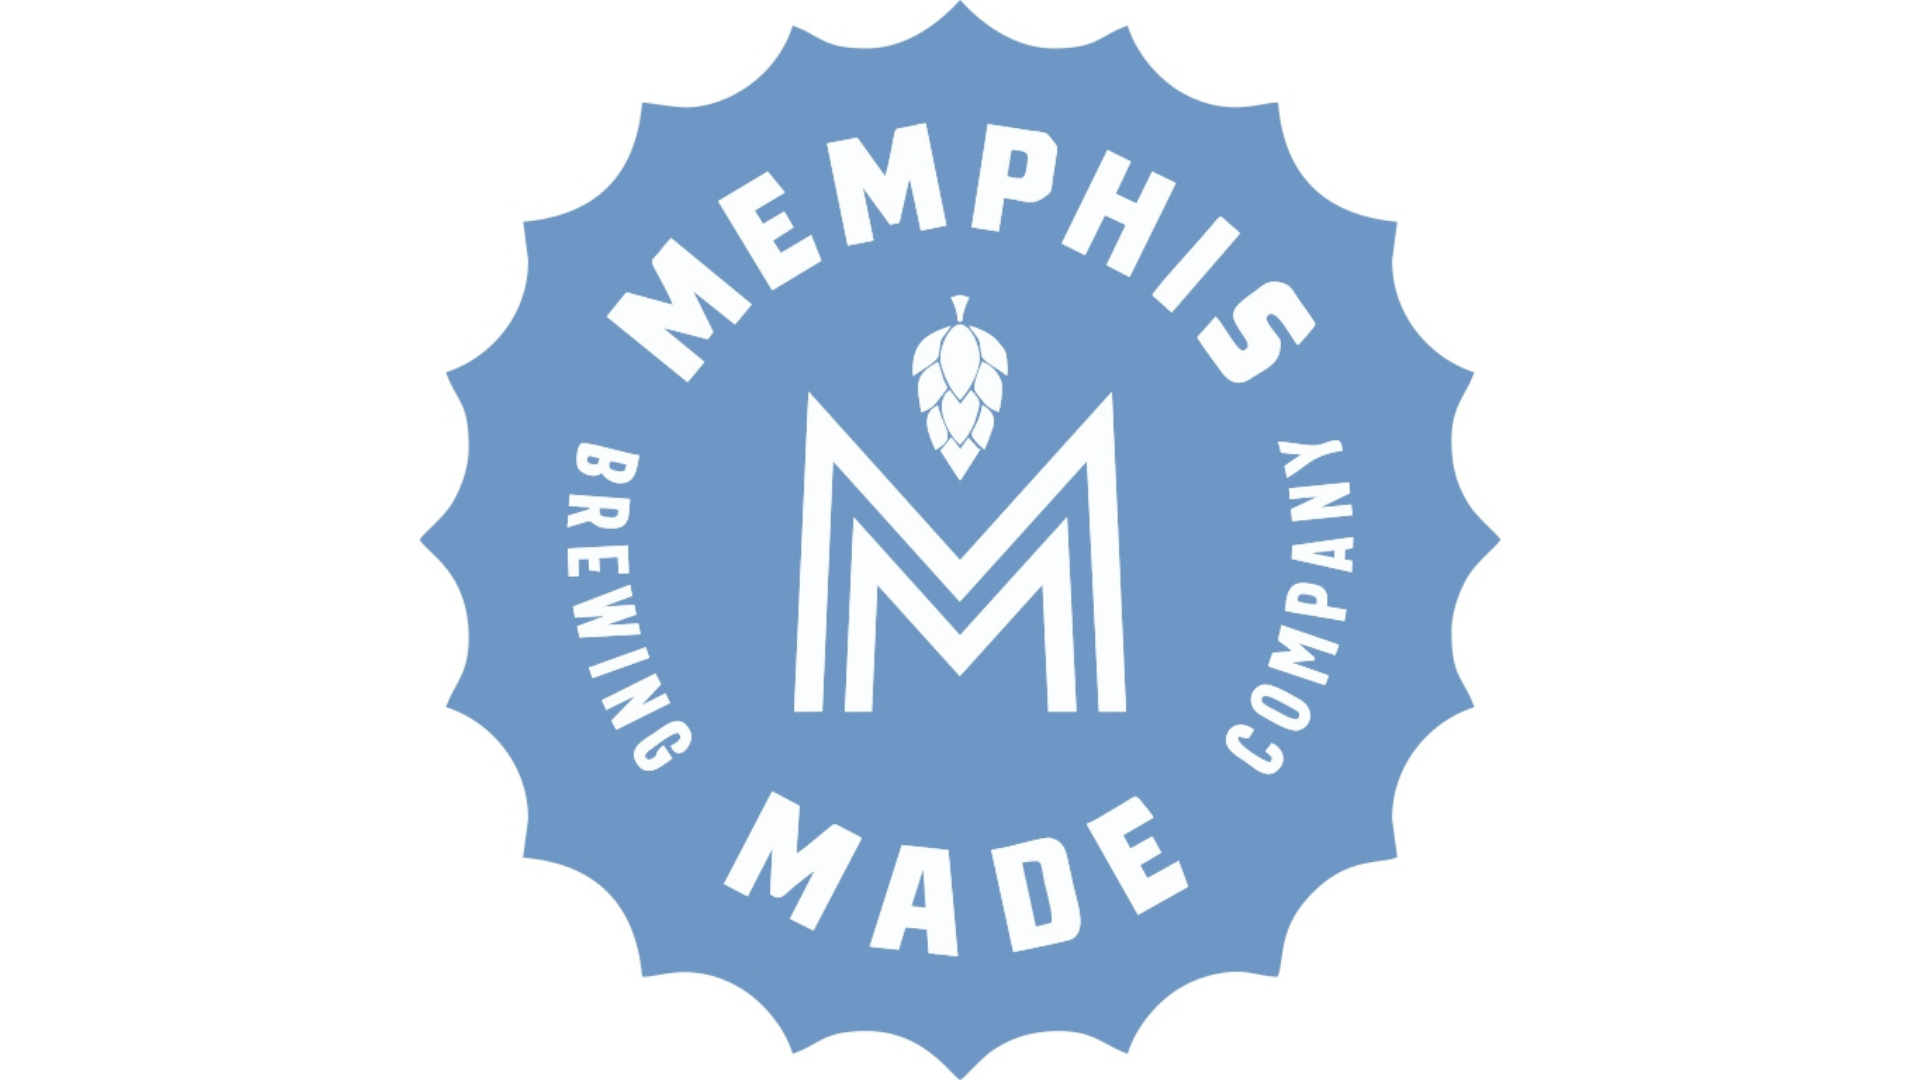 Memphis Made Brewing Co.